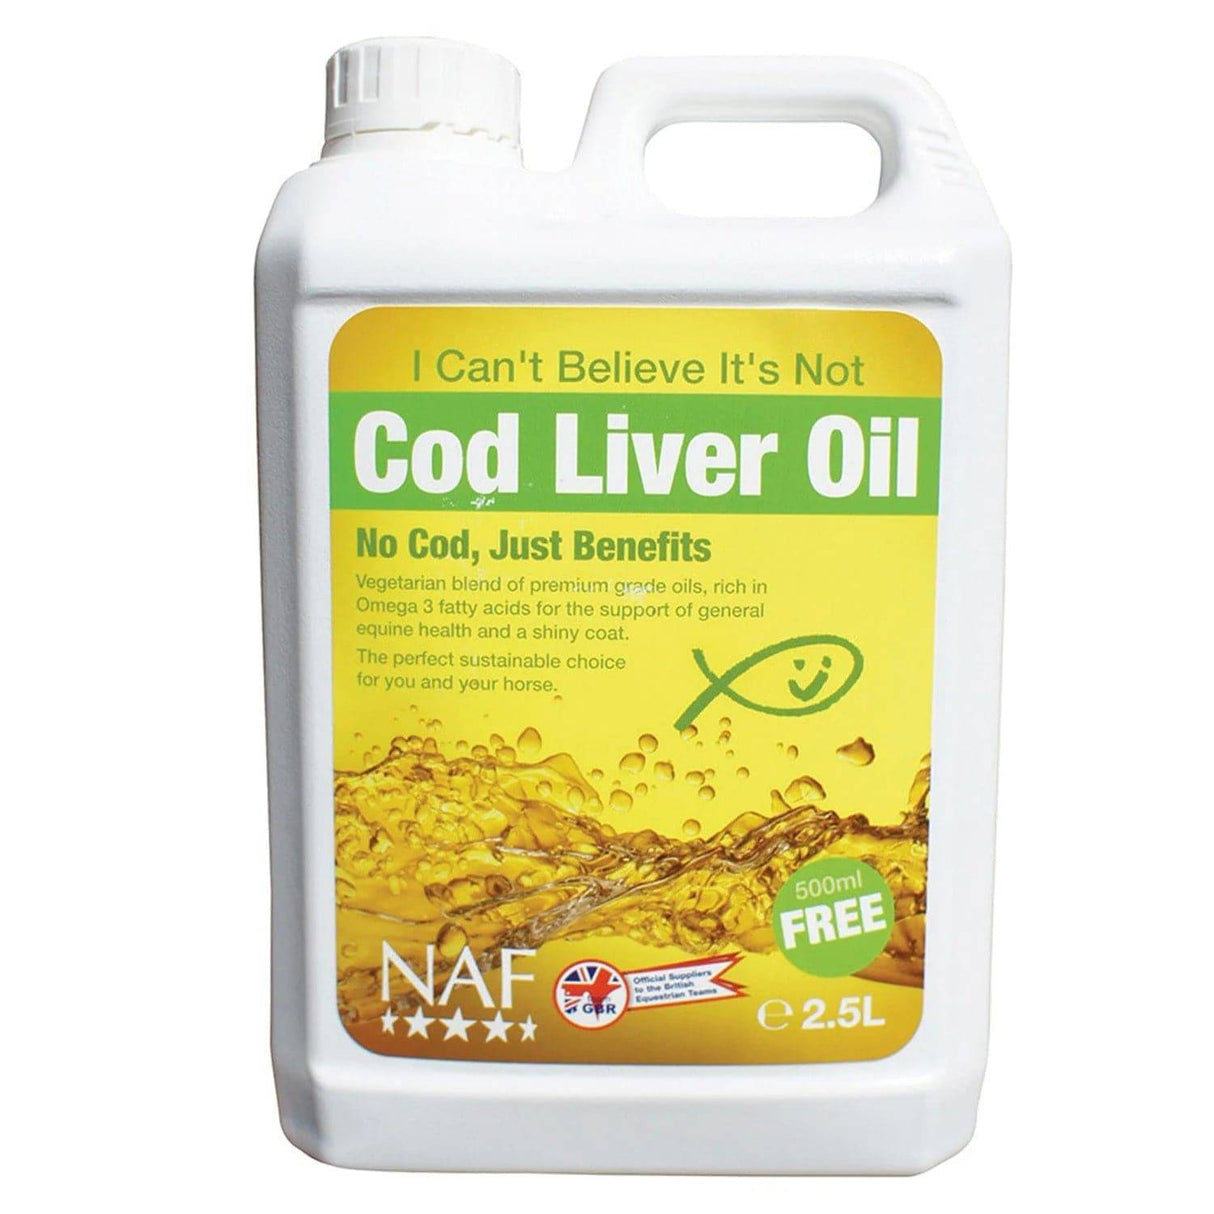 NAF I Cant Believe Its Not Cod Liver Oil Horse Supplements 2.5 Litre Barnstaple Equestrian Supplies